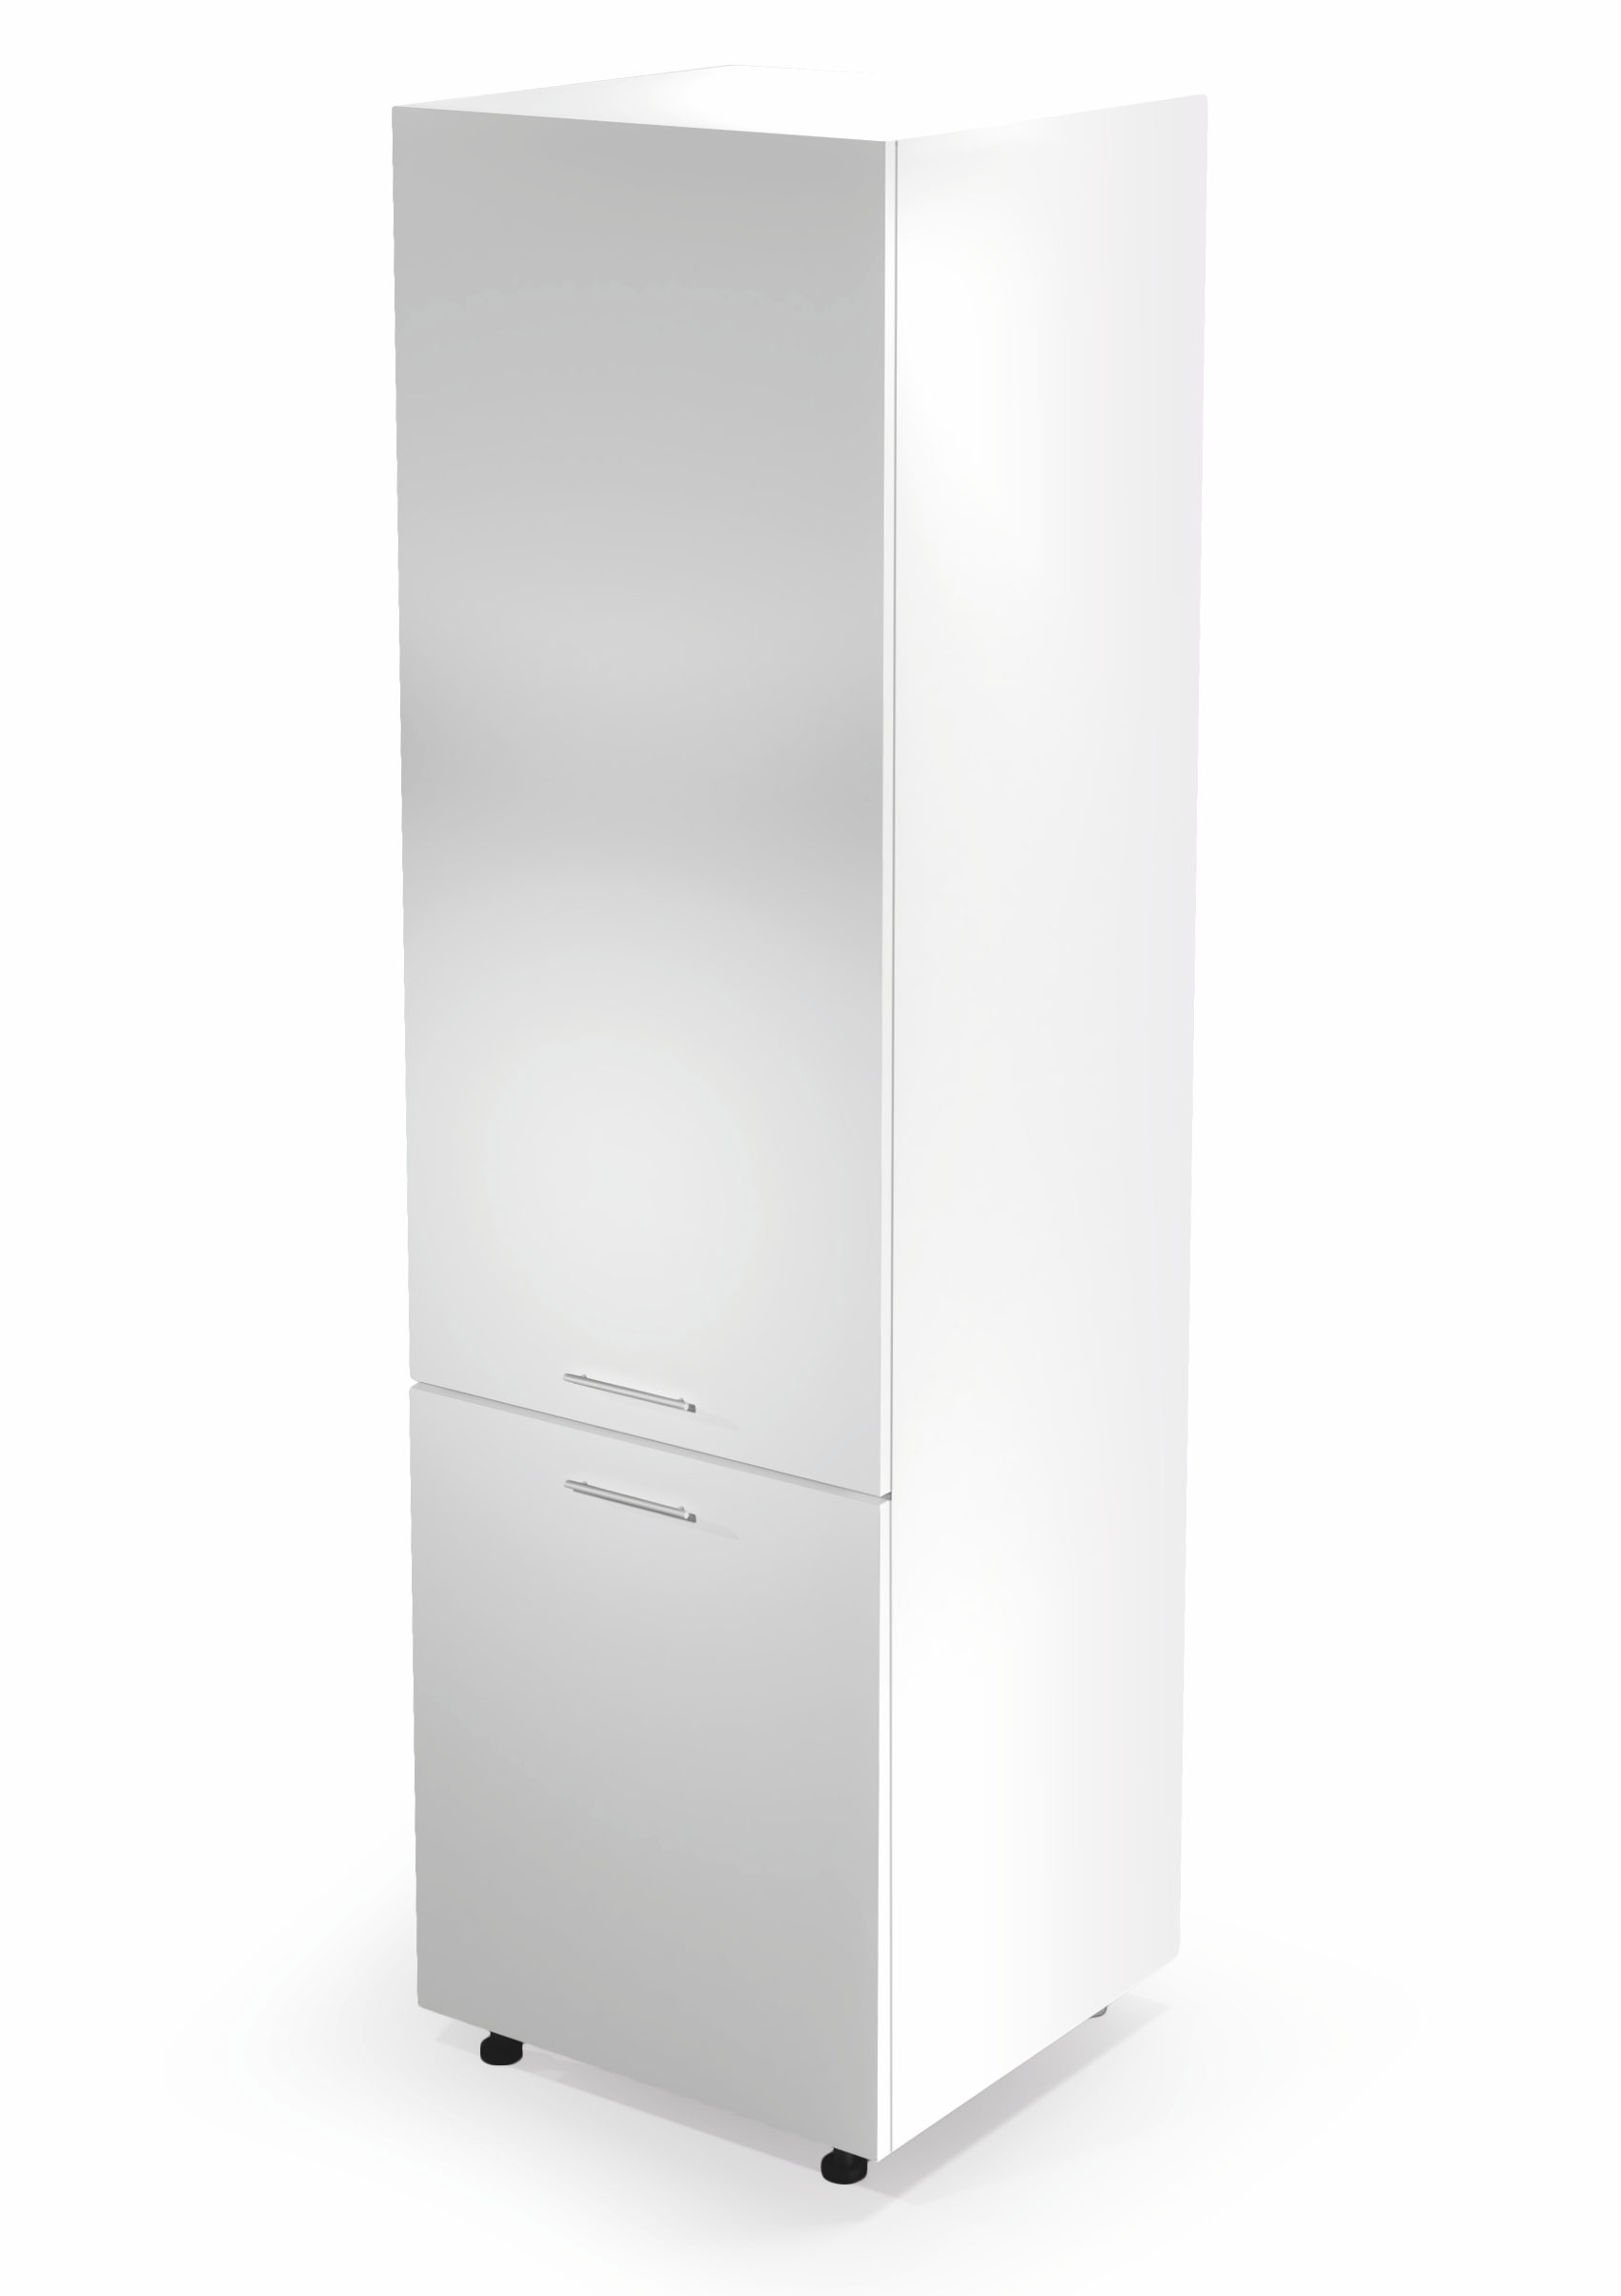 Vysoká kuchyňská skříň Vento DL-60/214 - bílá vento dl-60/214 Skříňka spodní vysoká přední část: Bílý